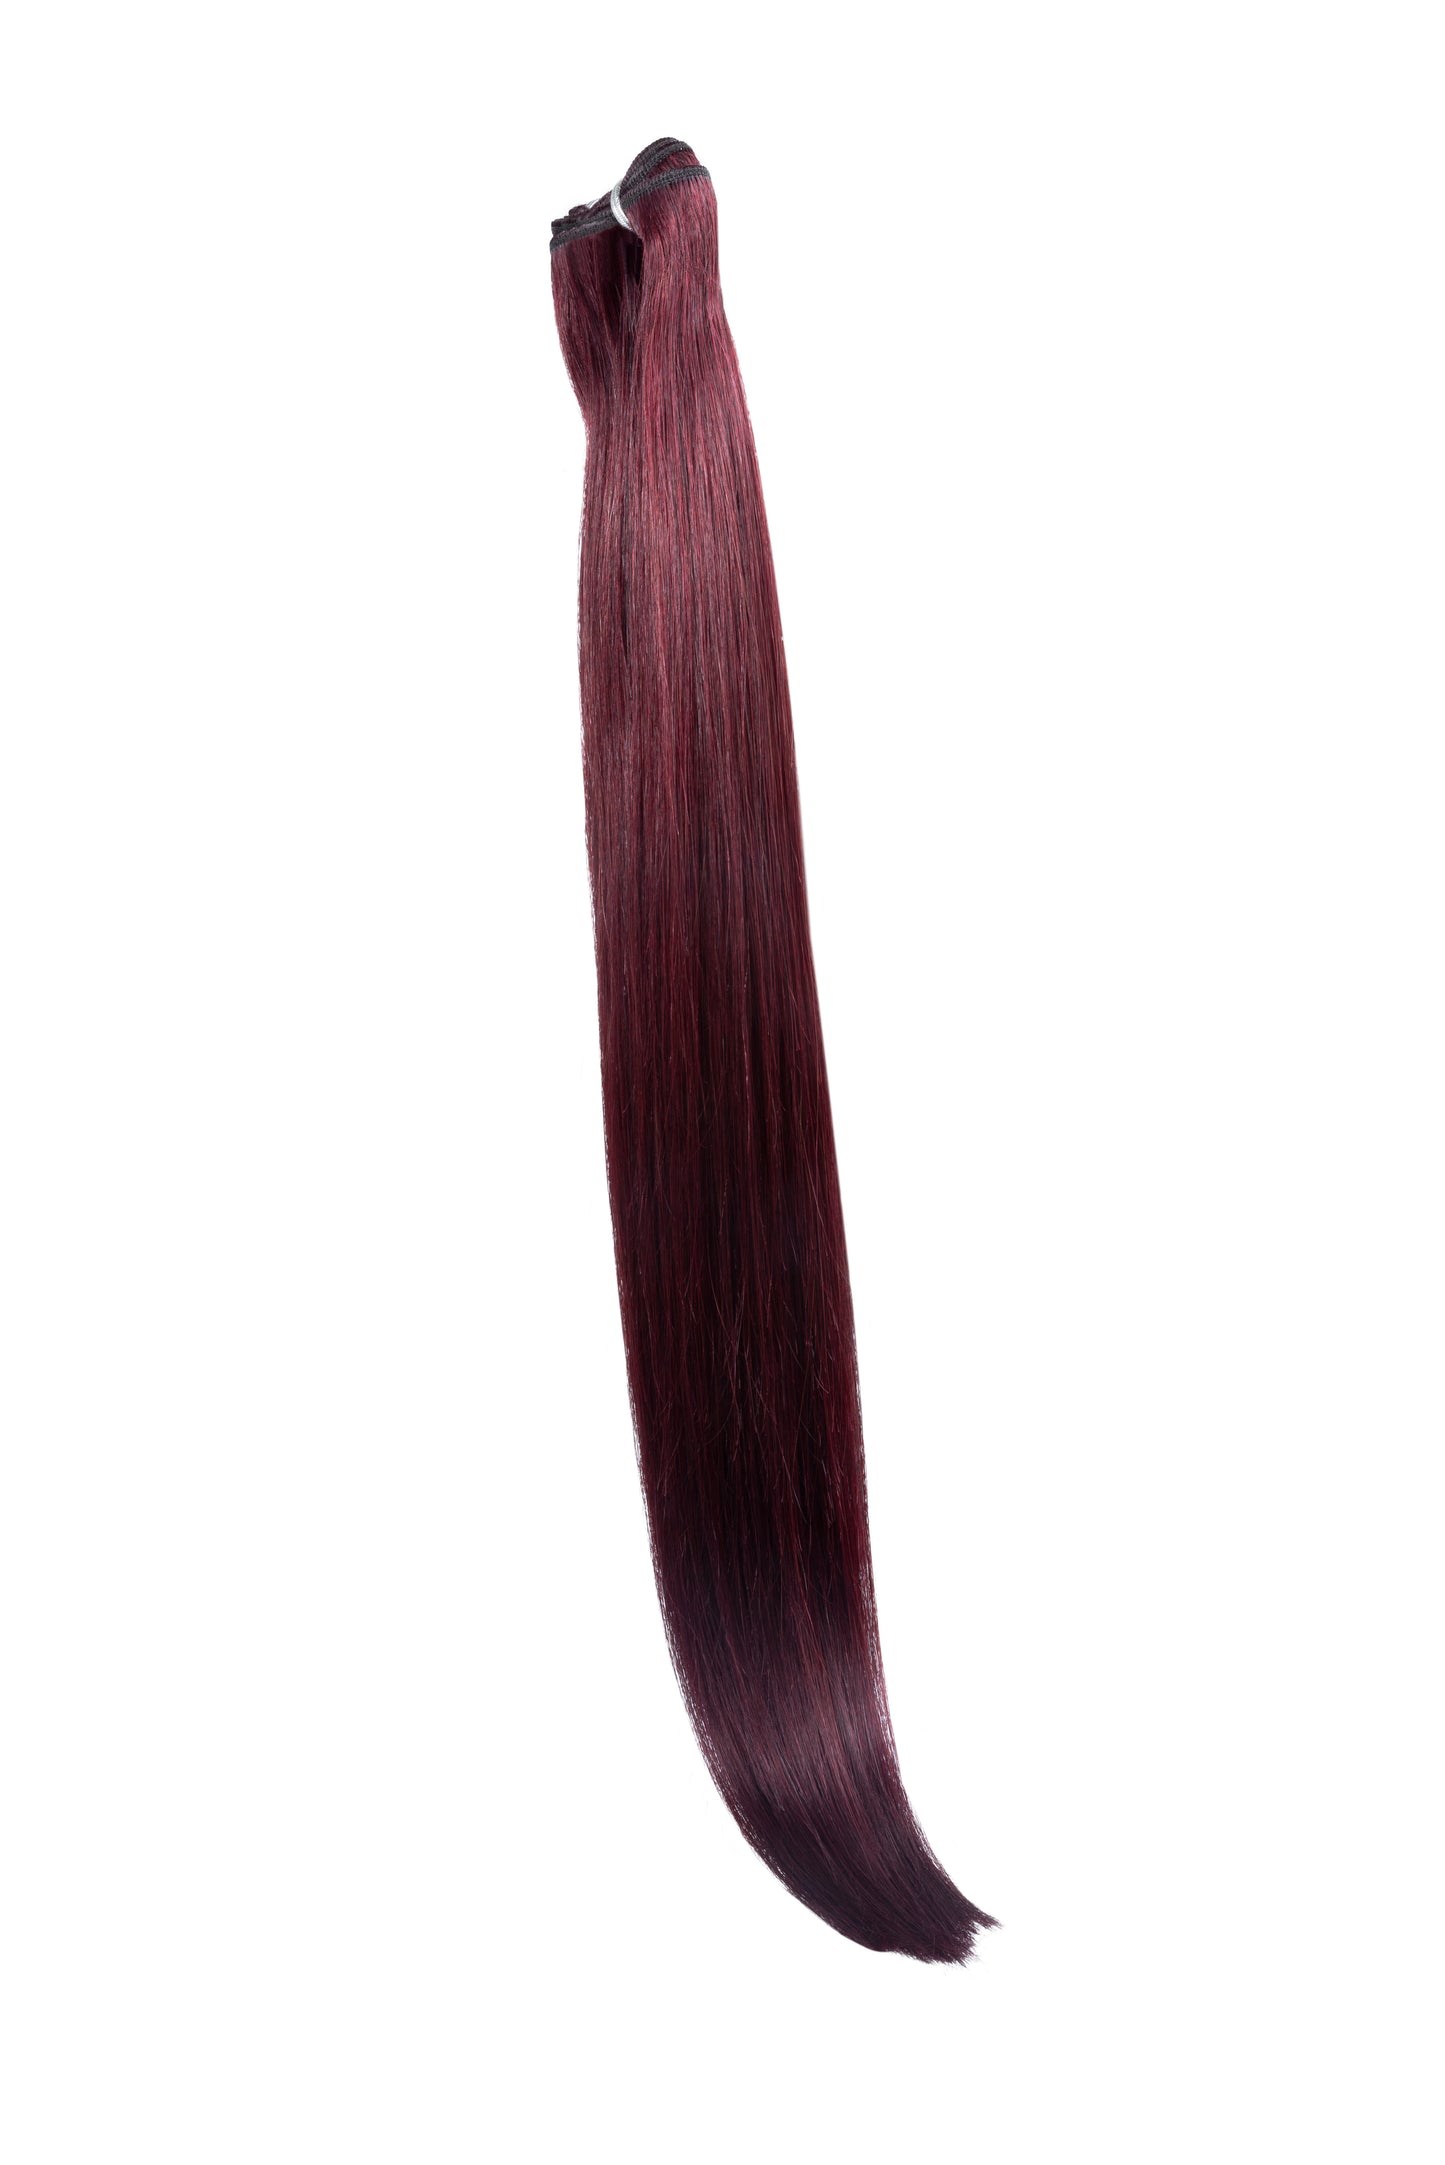 Straight - Human Hair Bundle - Color #99J